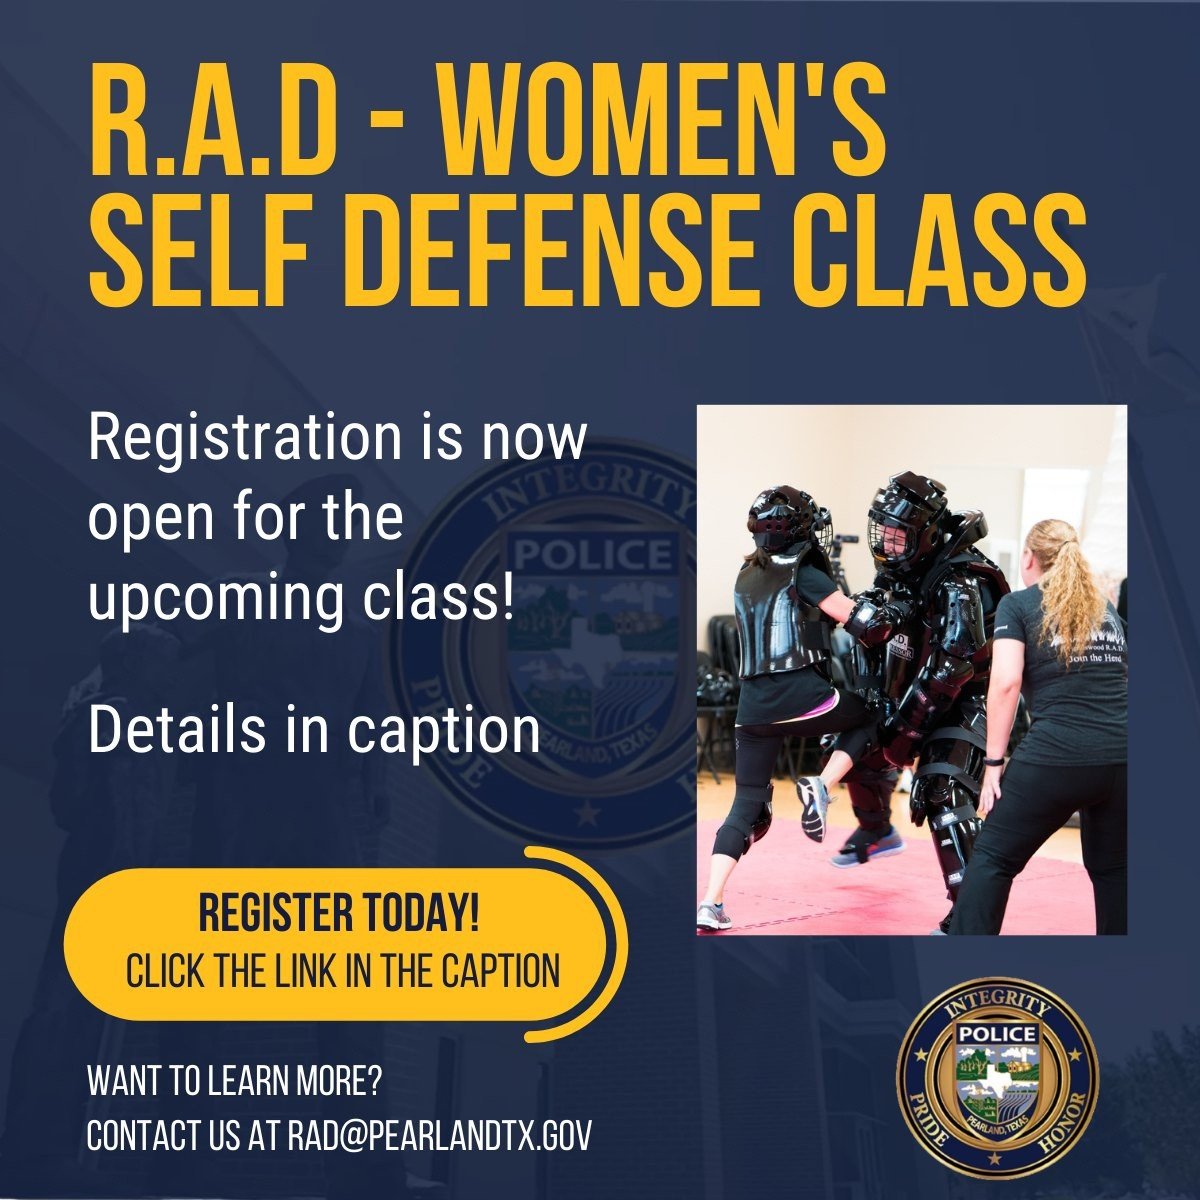 Women's Self-Defense Workshop